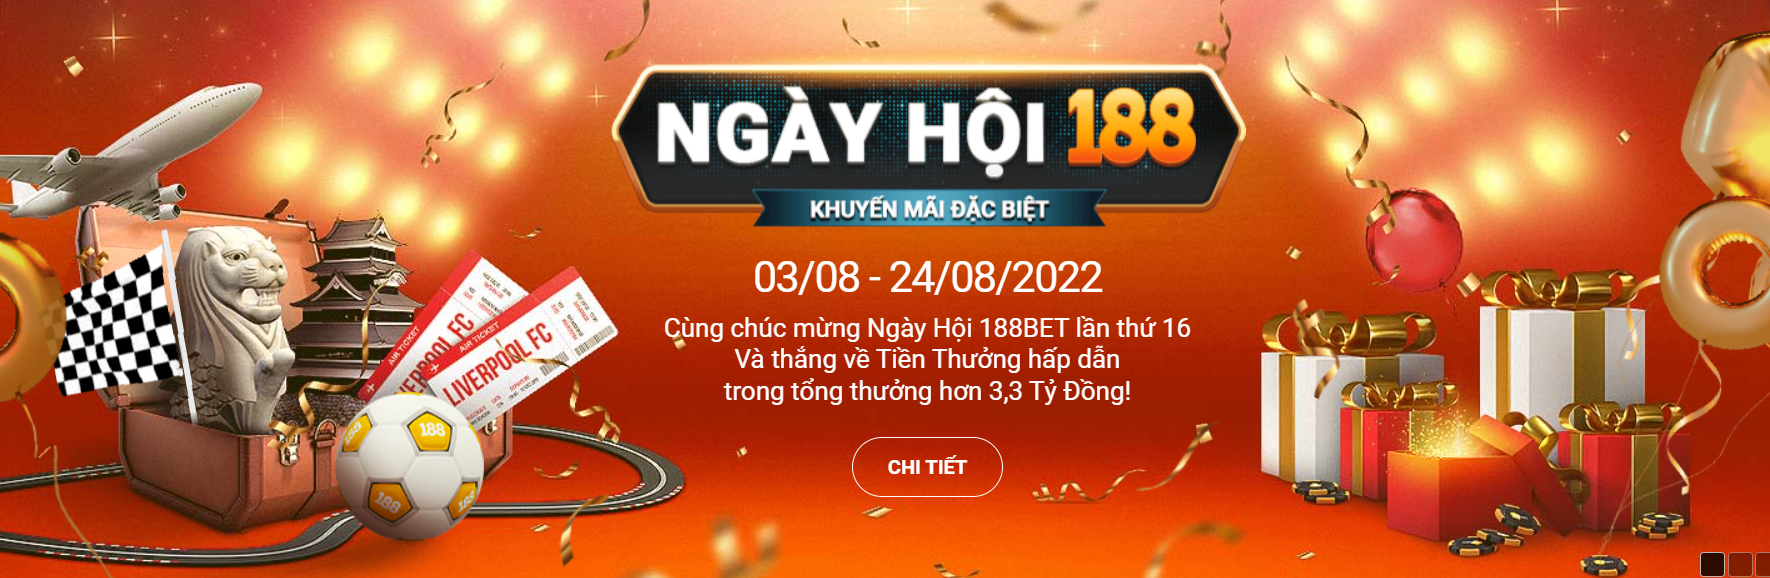 Tong hop khuyen mai nha cai thang 8/2022